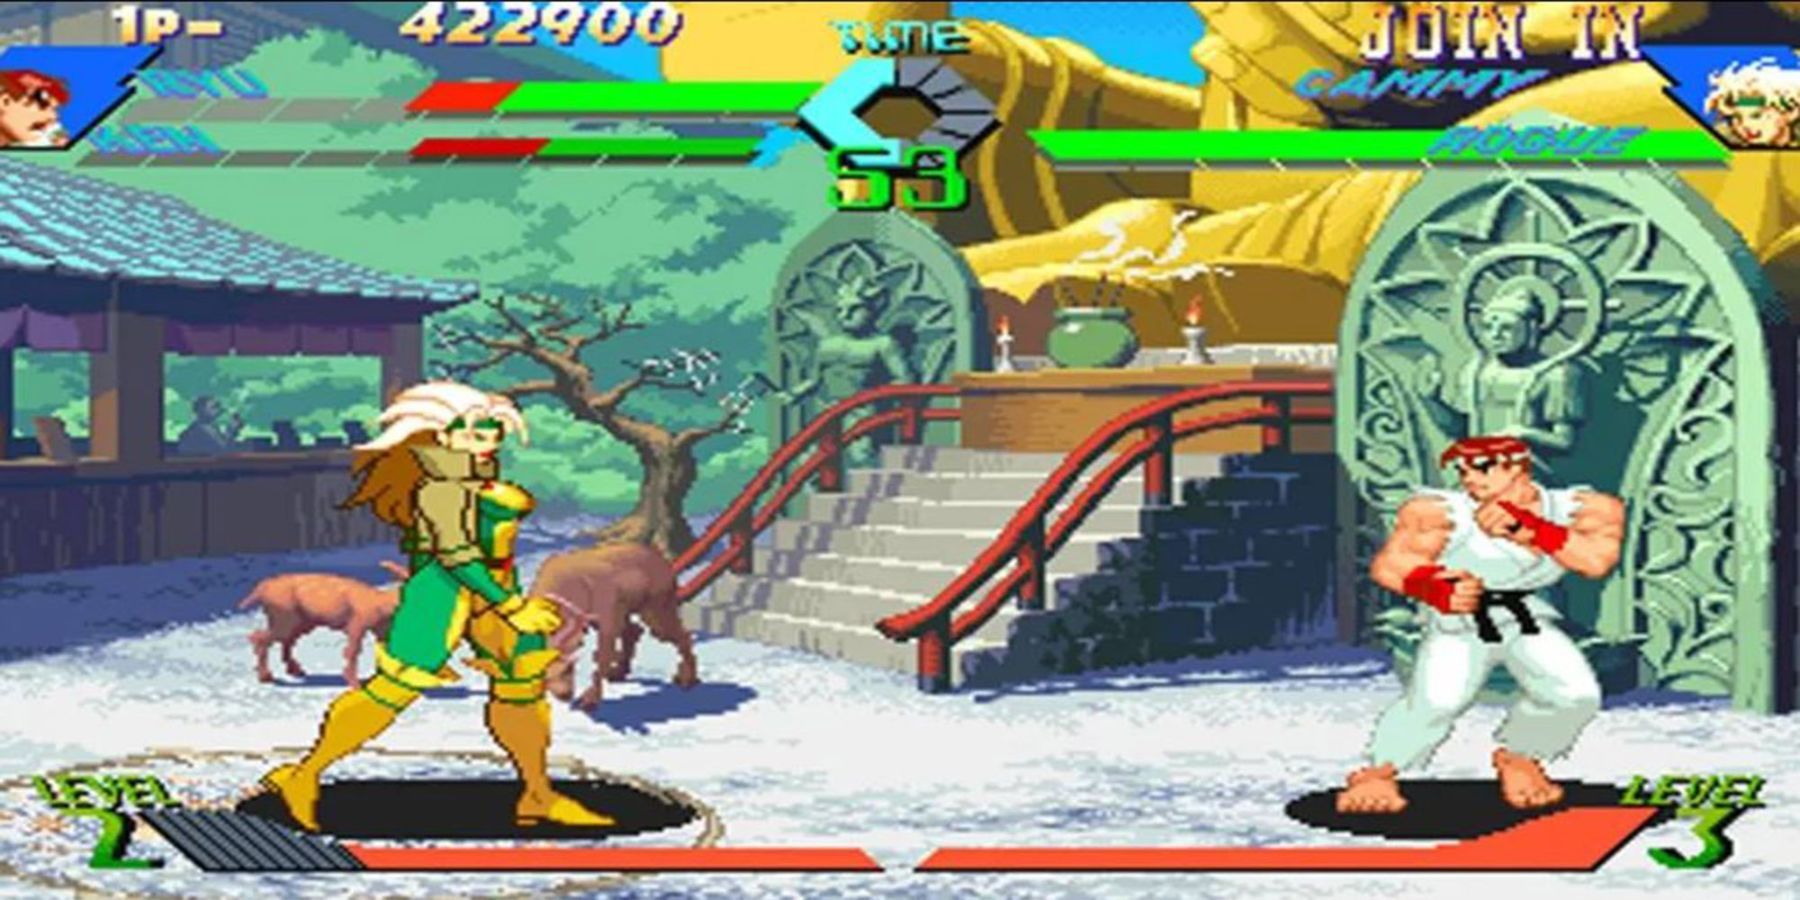 X-Men vs. Street Fighter